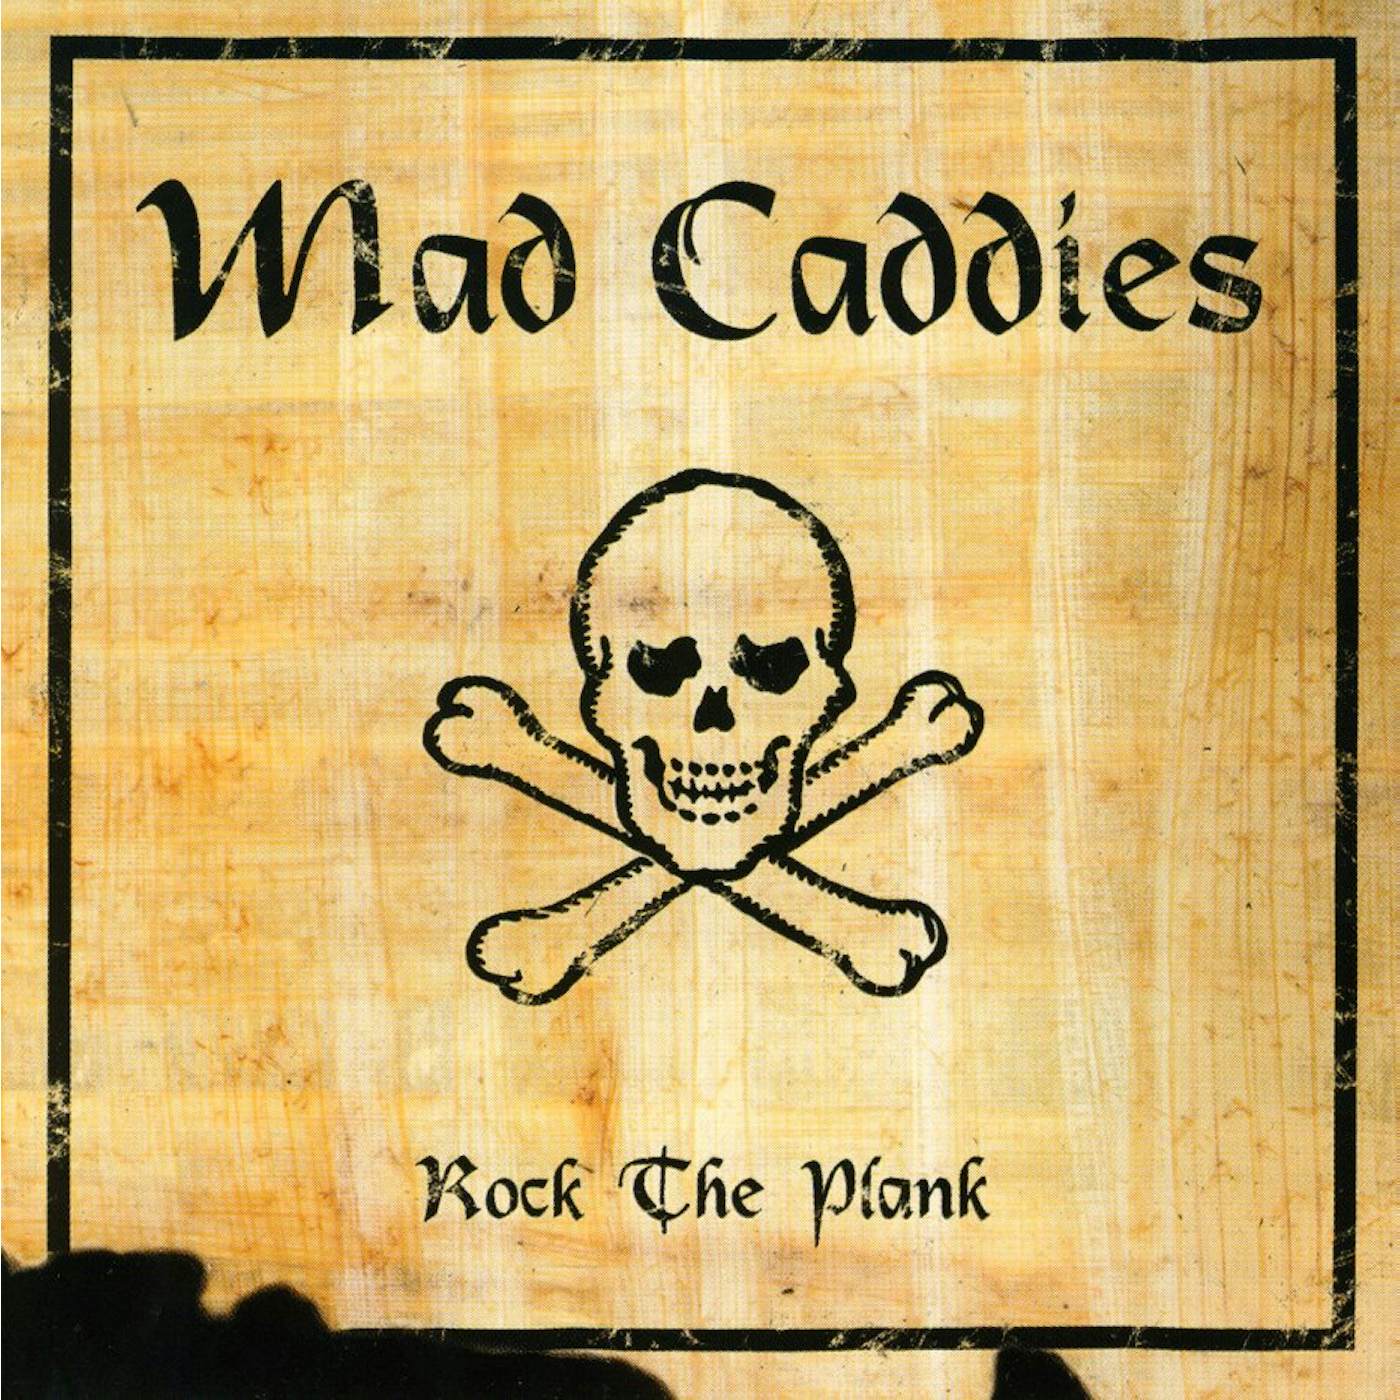 Mad Caddies ROCK THE PLANK CD